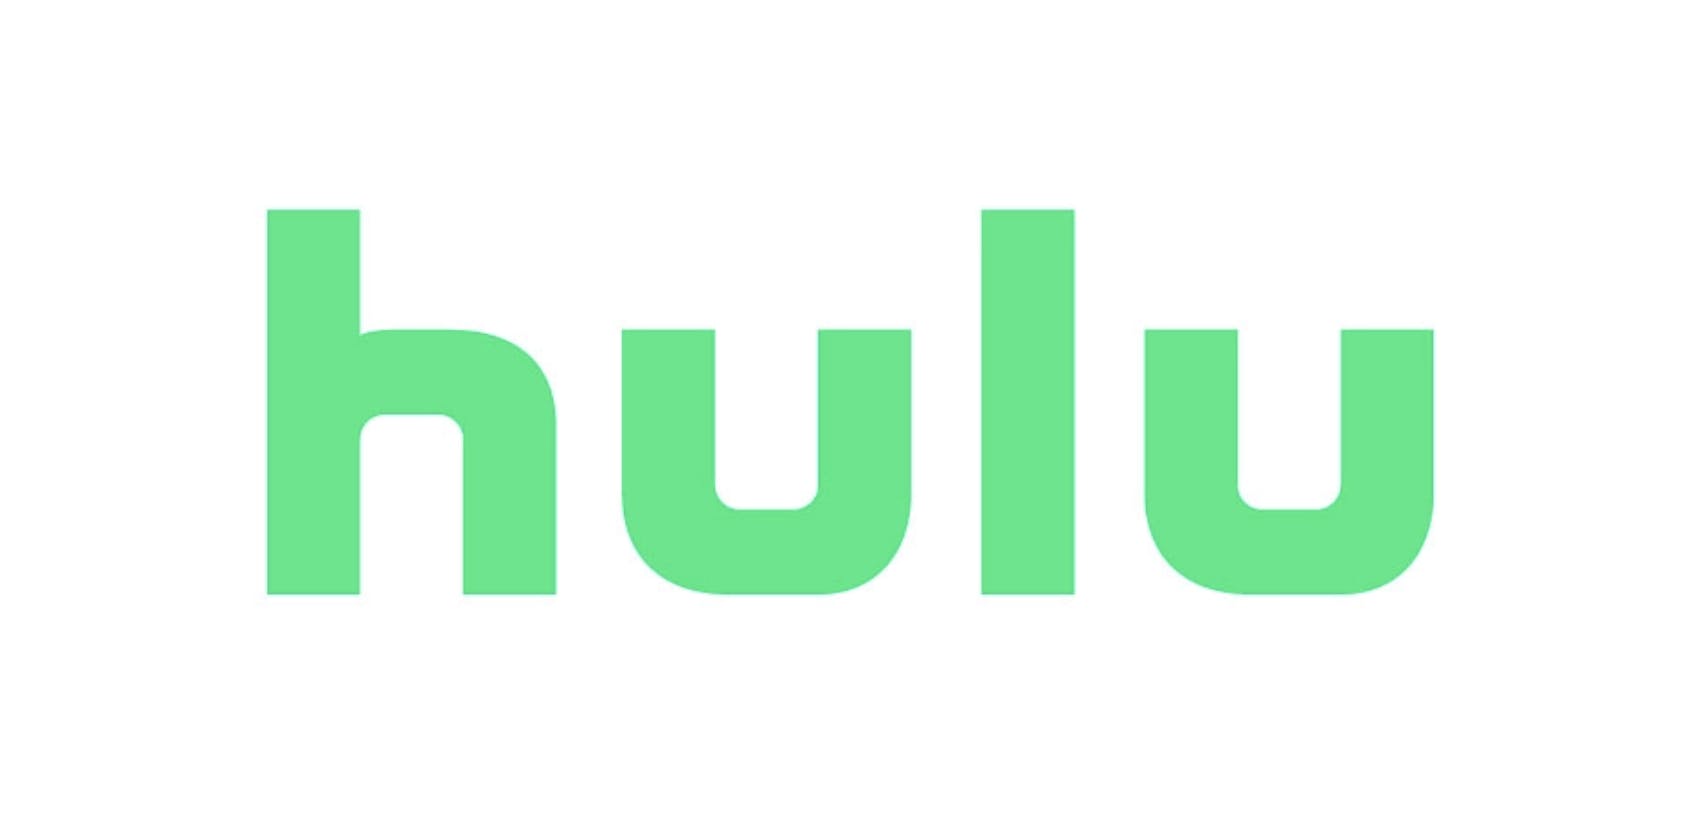 An image of the Hulu logo